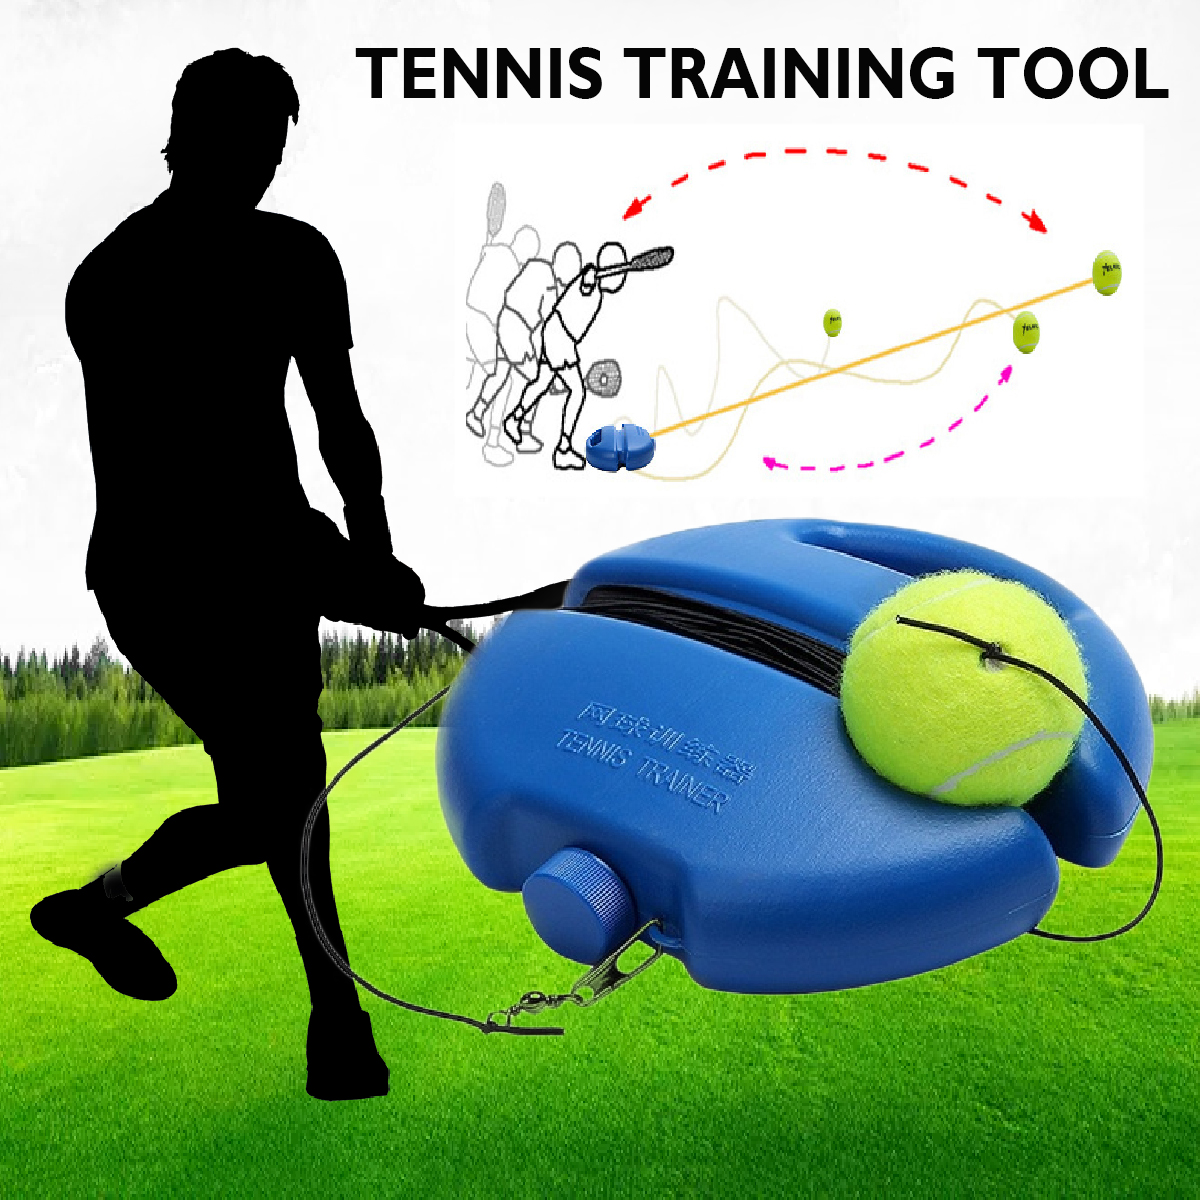 Single-Tennis-Trainer-Retractable-Rebound-Tennis-Training-Tool-Sport-Practice-Outdoor-1724380-1